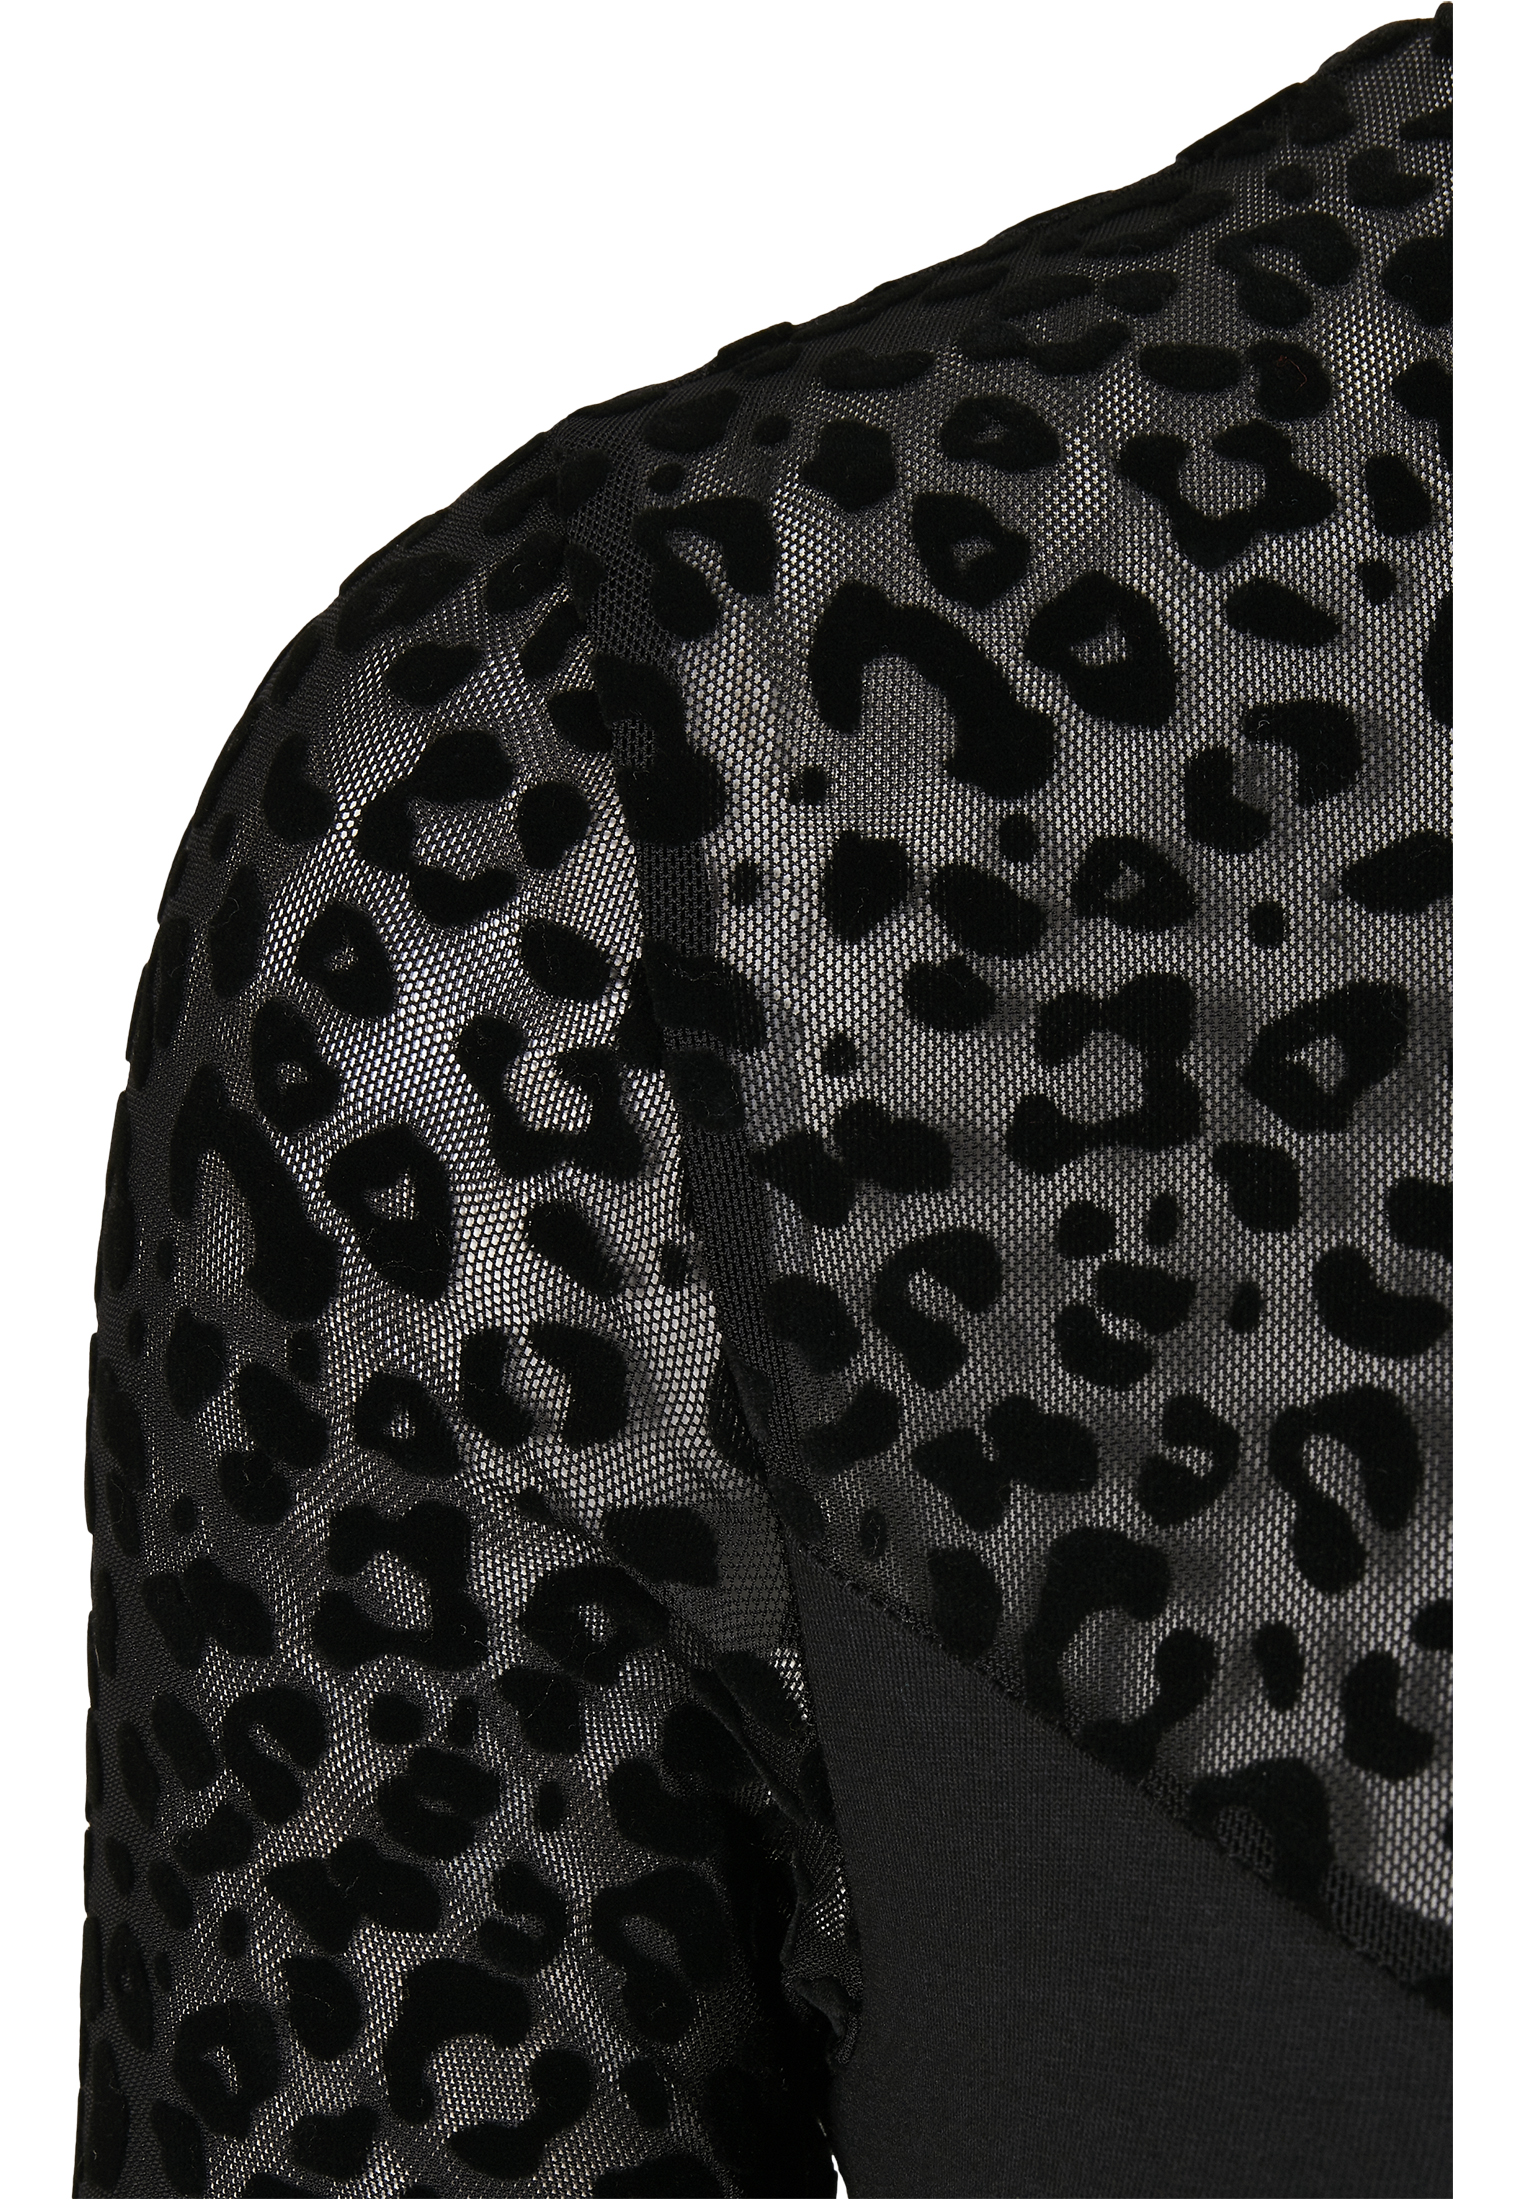 Kleider & R?cke Ladies Flock Lace Turtle Neck Dress in Farbe black